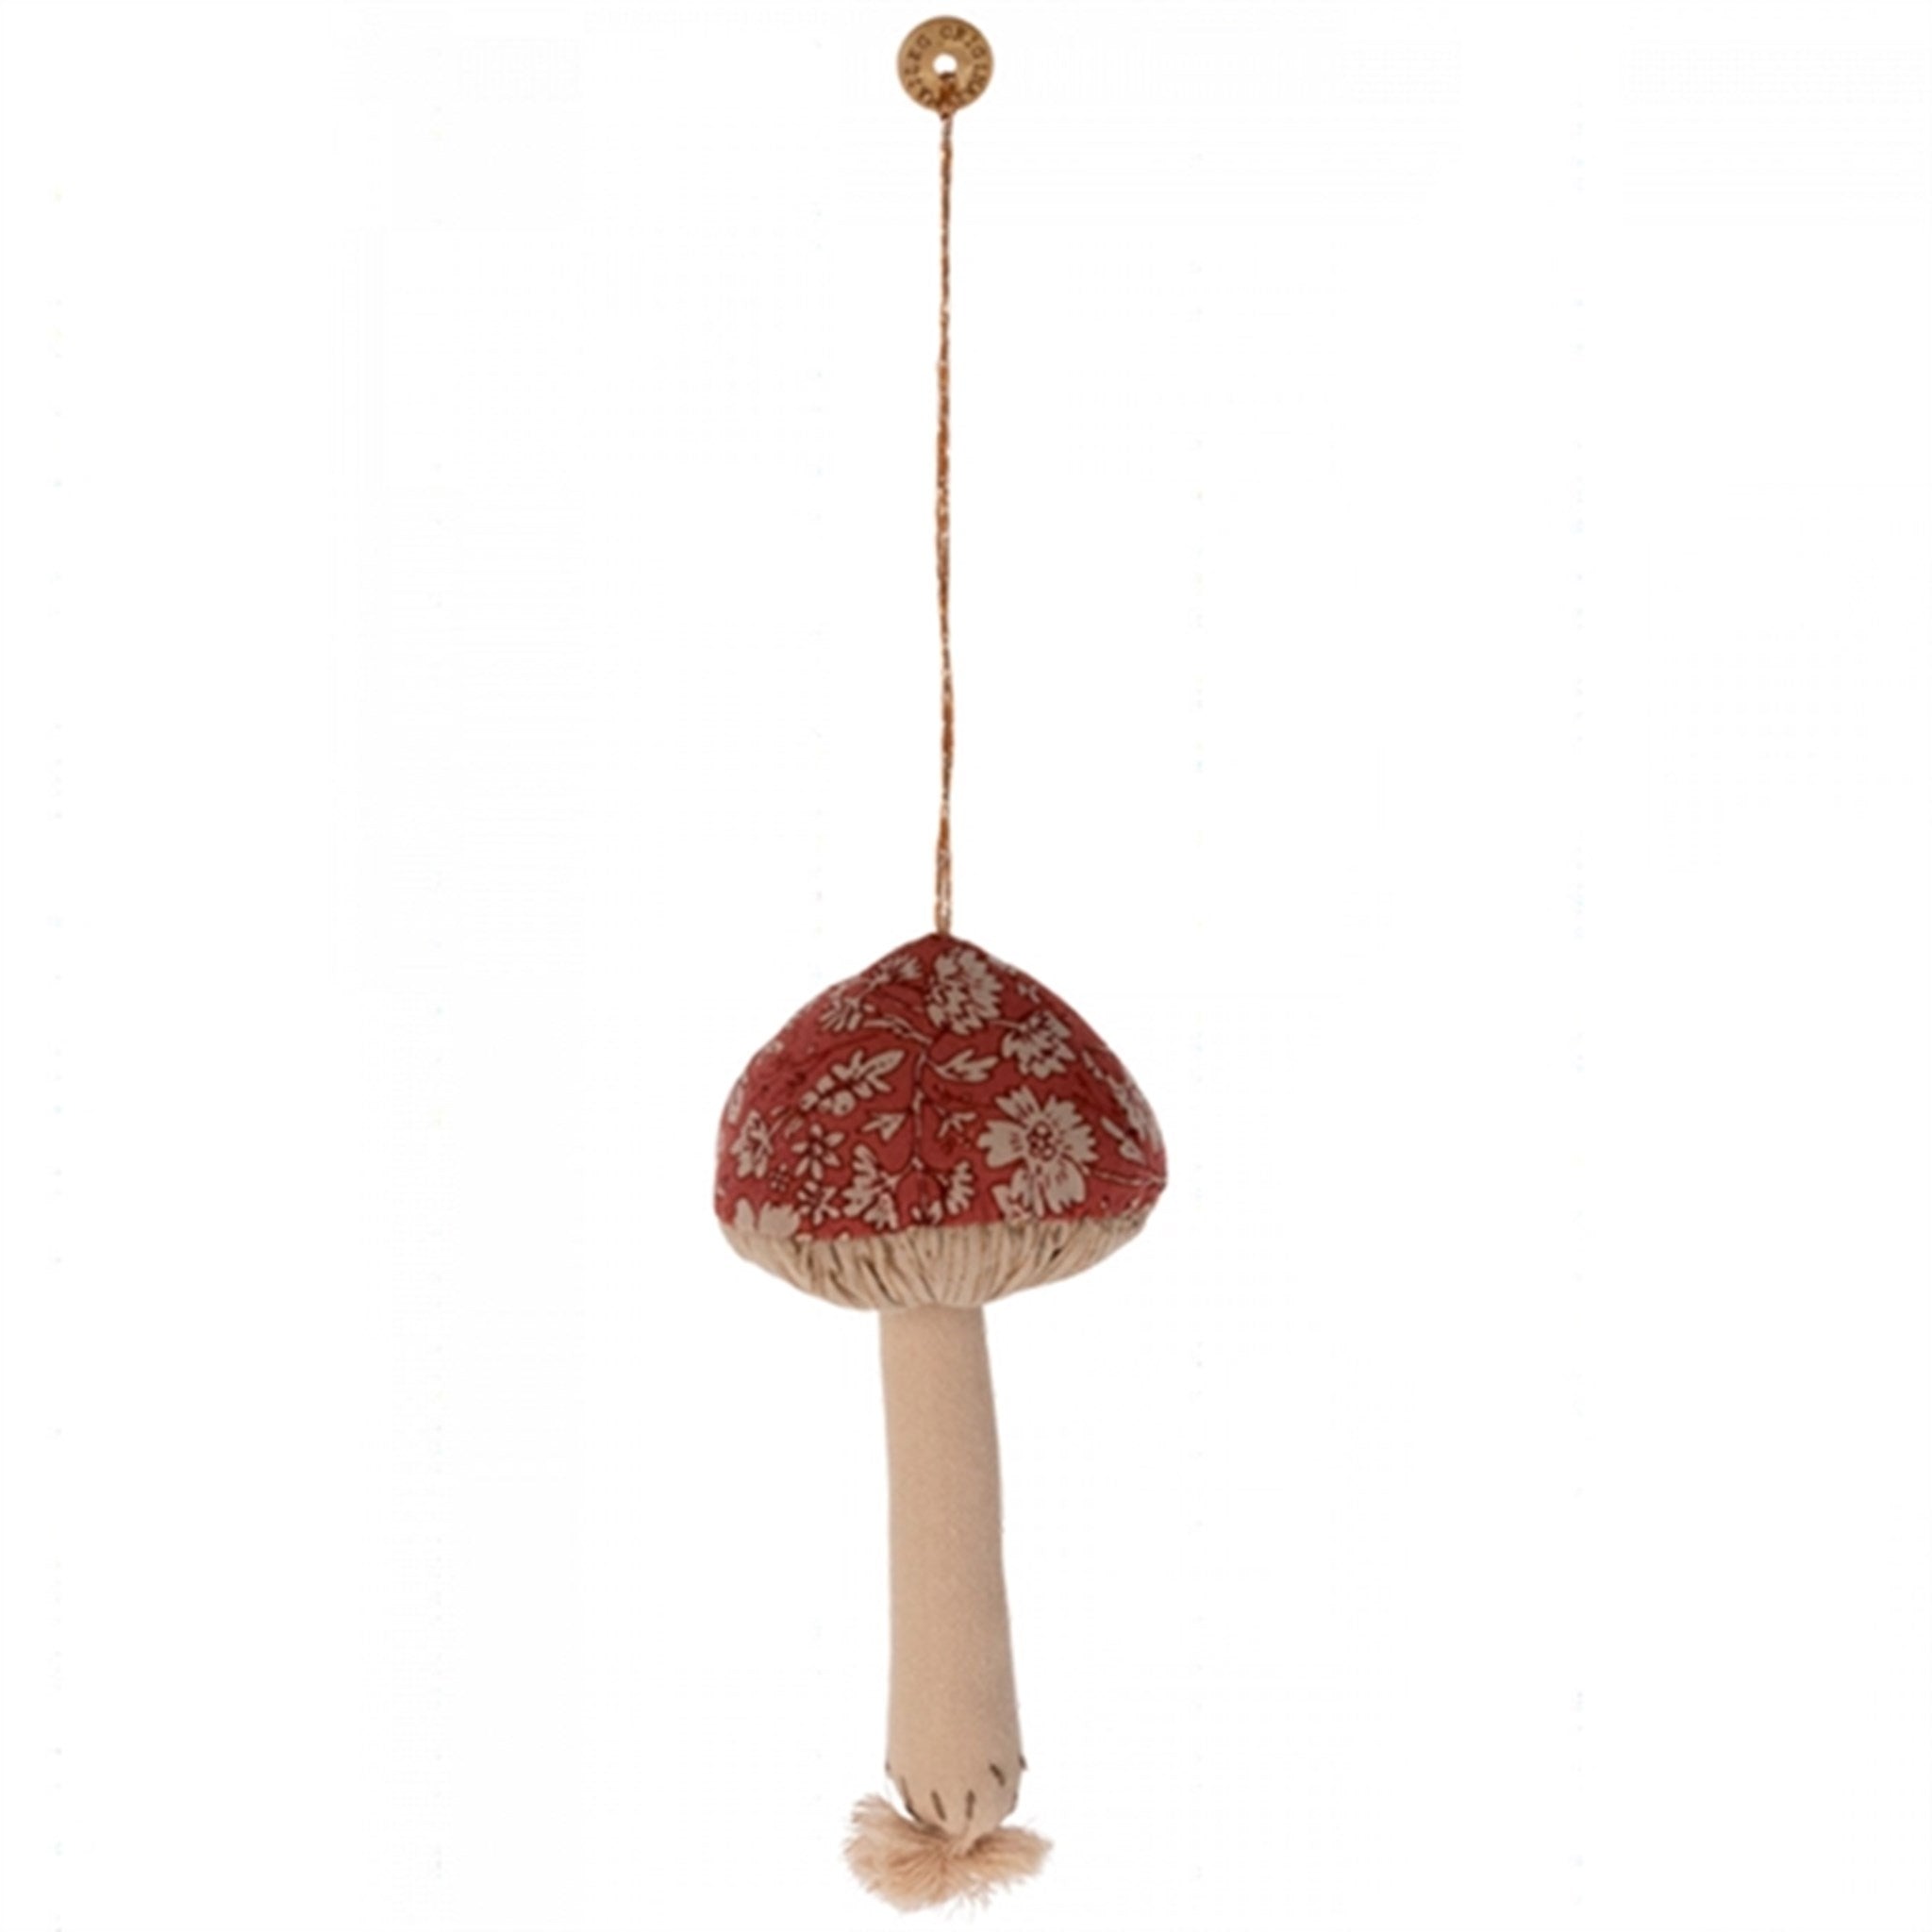 Maileg Mushroom Ornament, Blossom Red